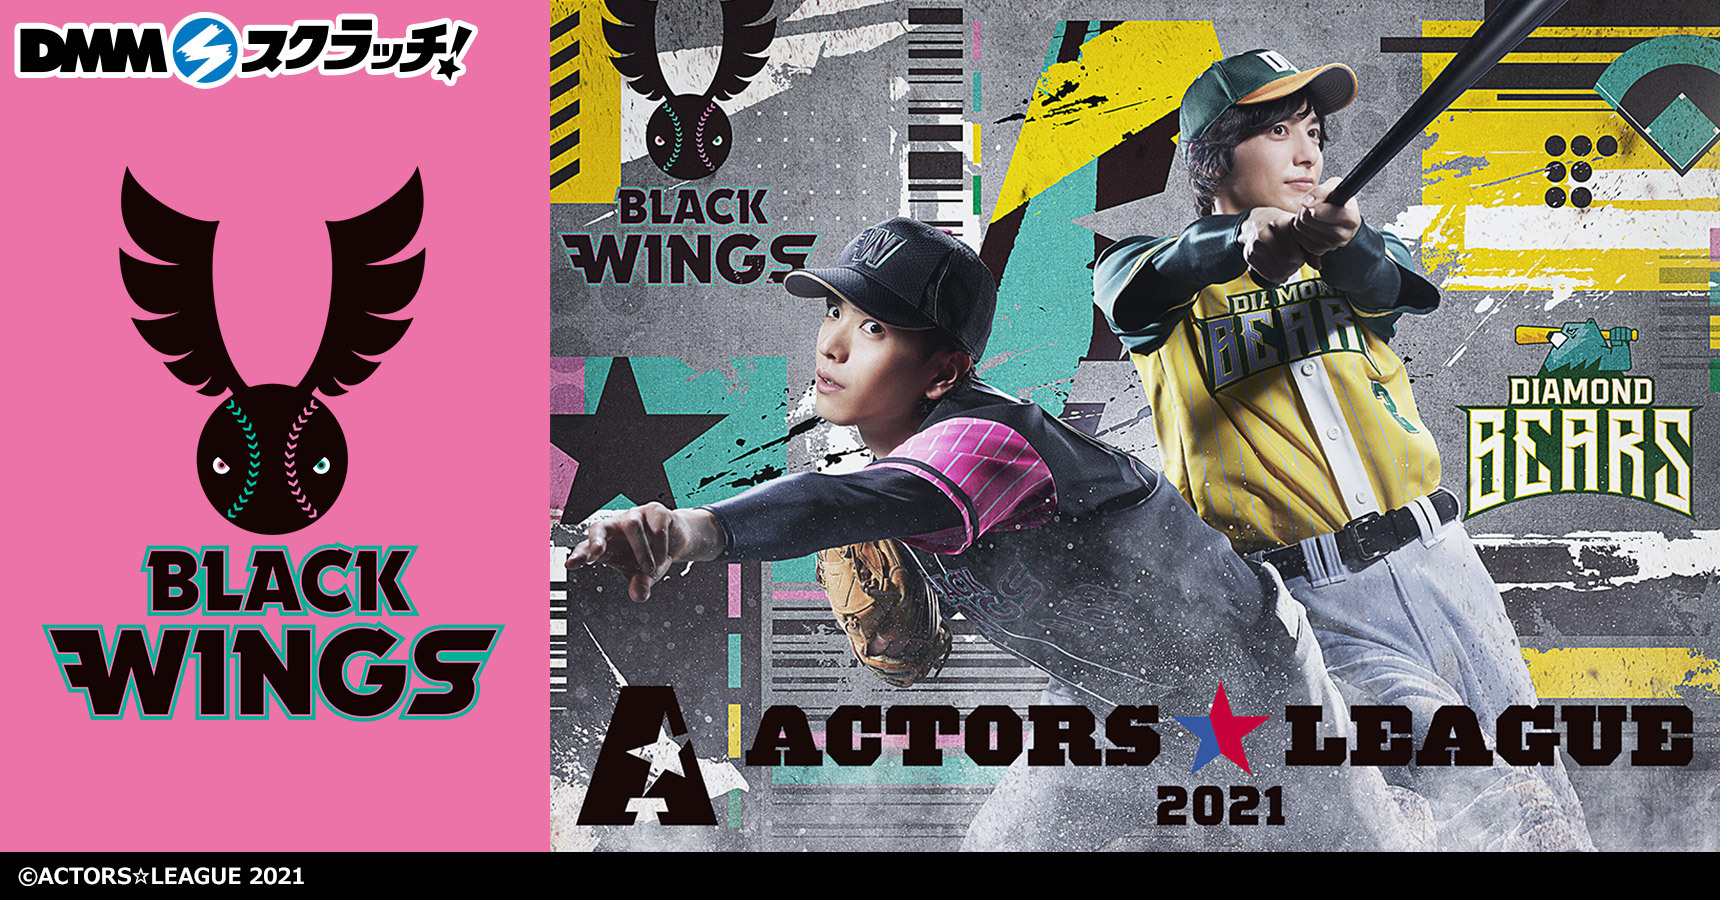 ACTORS☆LEAGUE 2021』BLACK WINGS スクラッチ - DMMスクラッチ